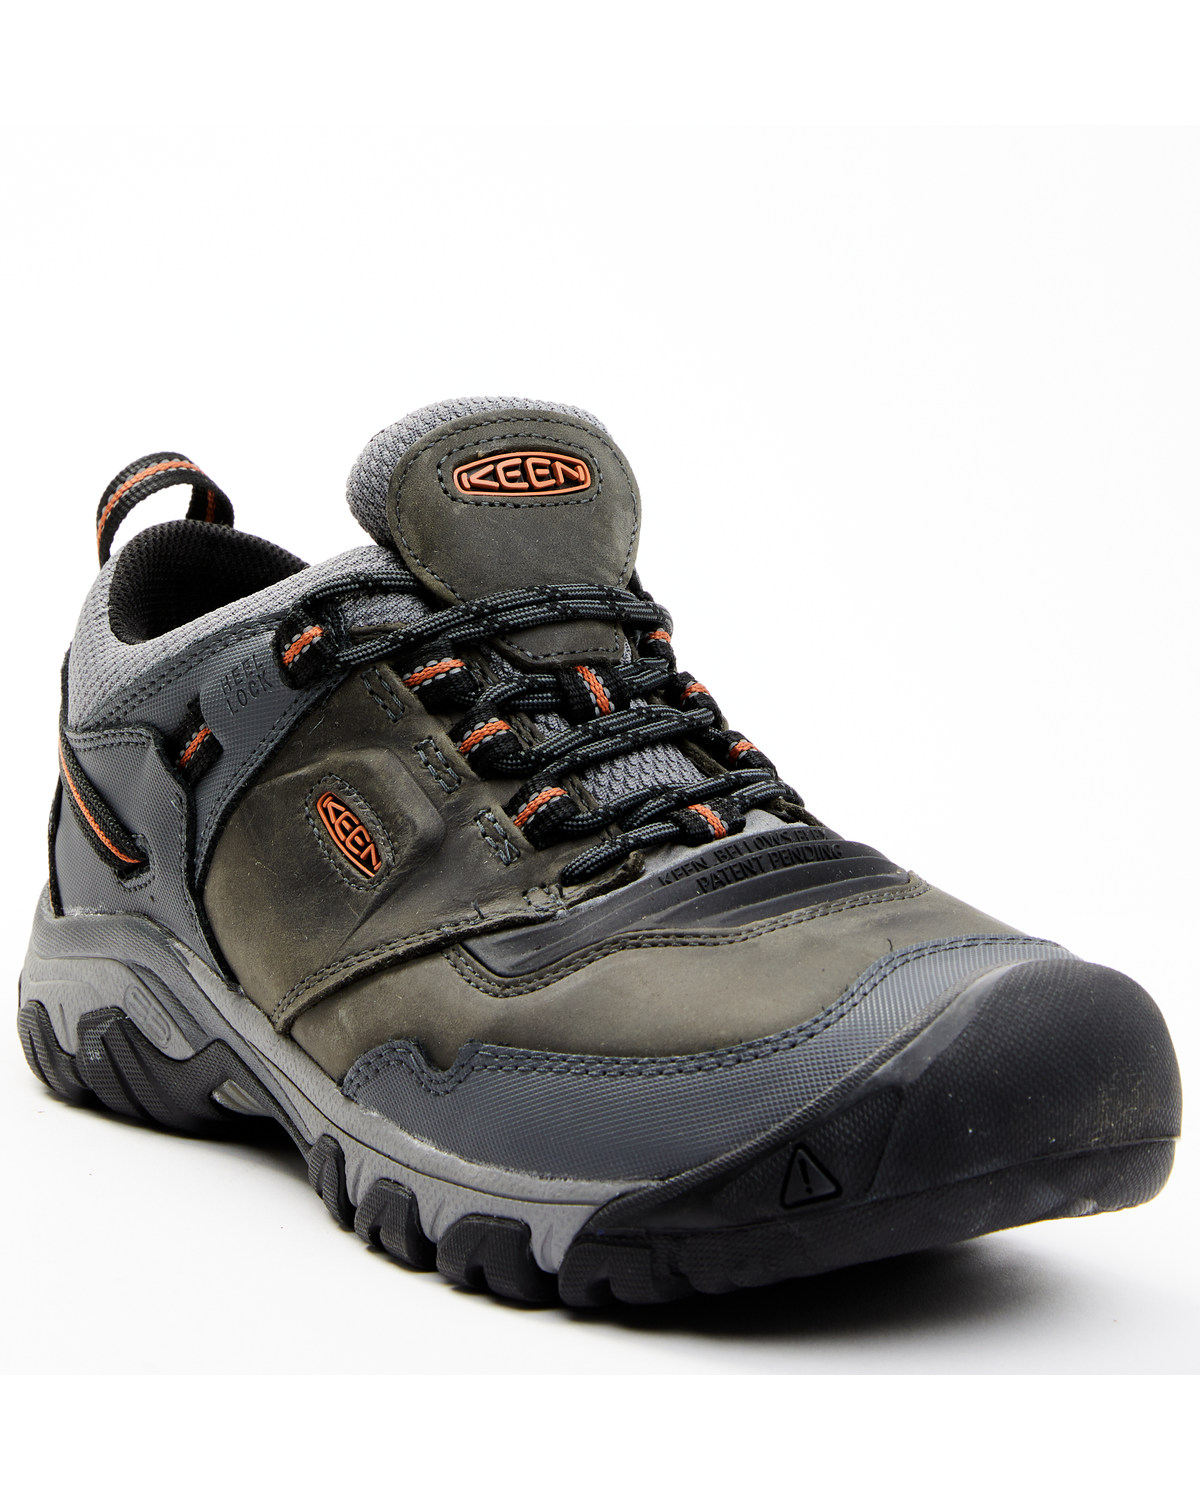 Keen Men's Ridge Flex Waterproof Hiking Shoes - Round Toe